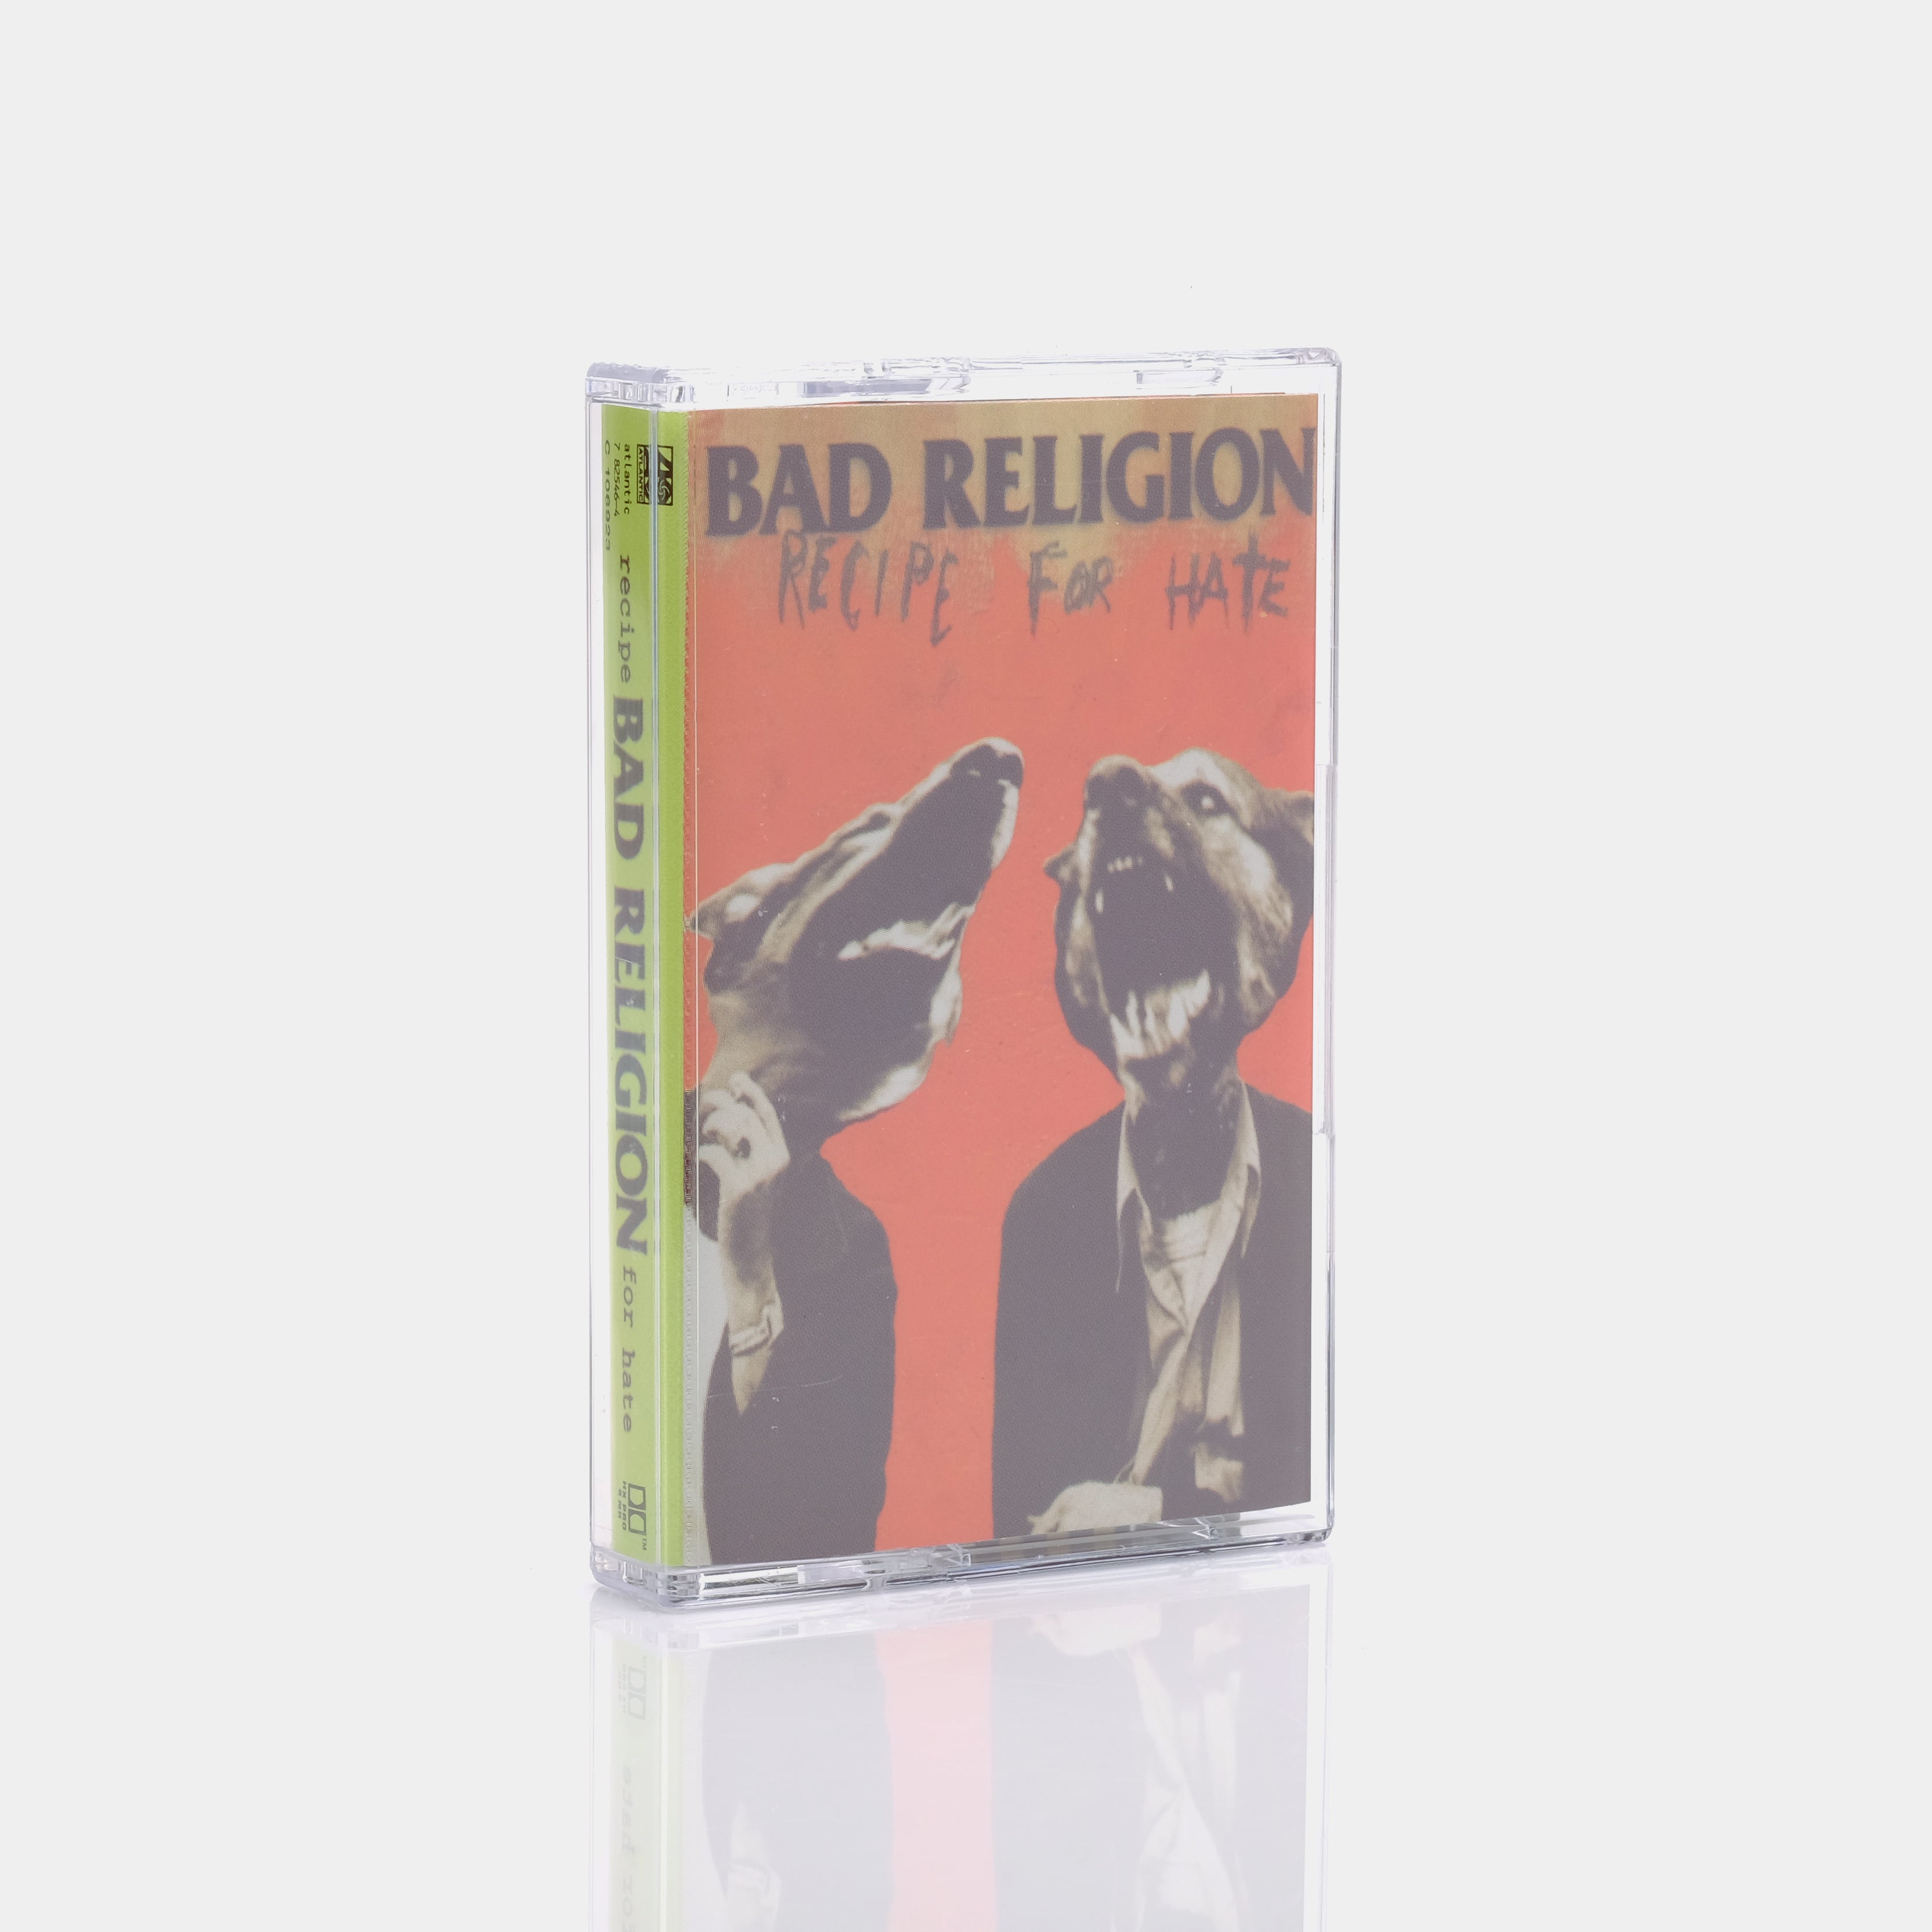 Bad Religion - Recipe For Hate Cassette Tape